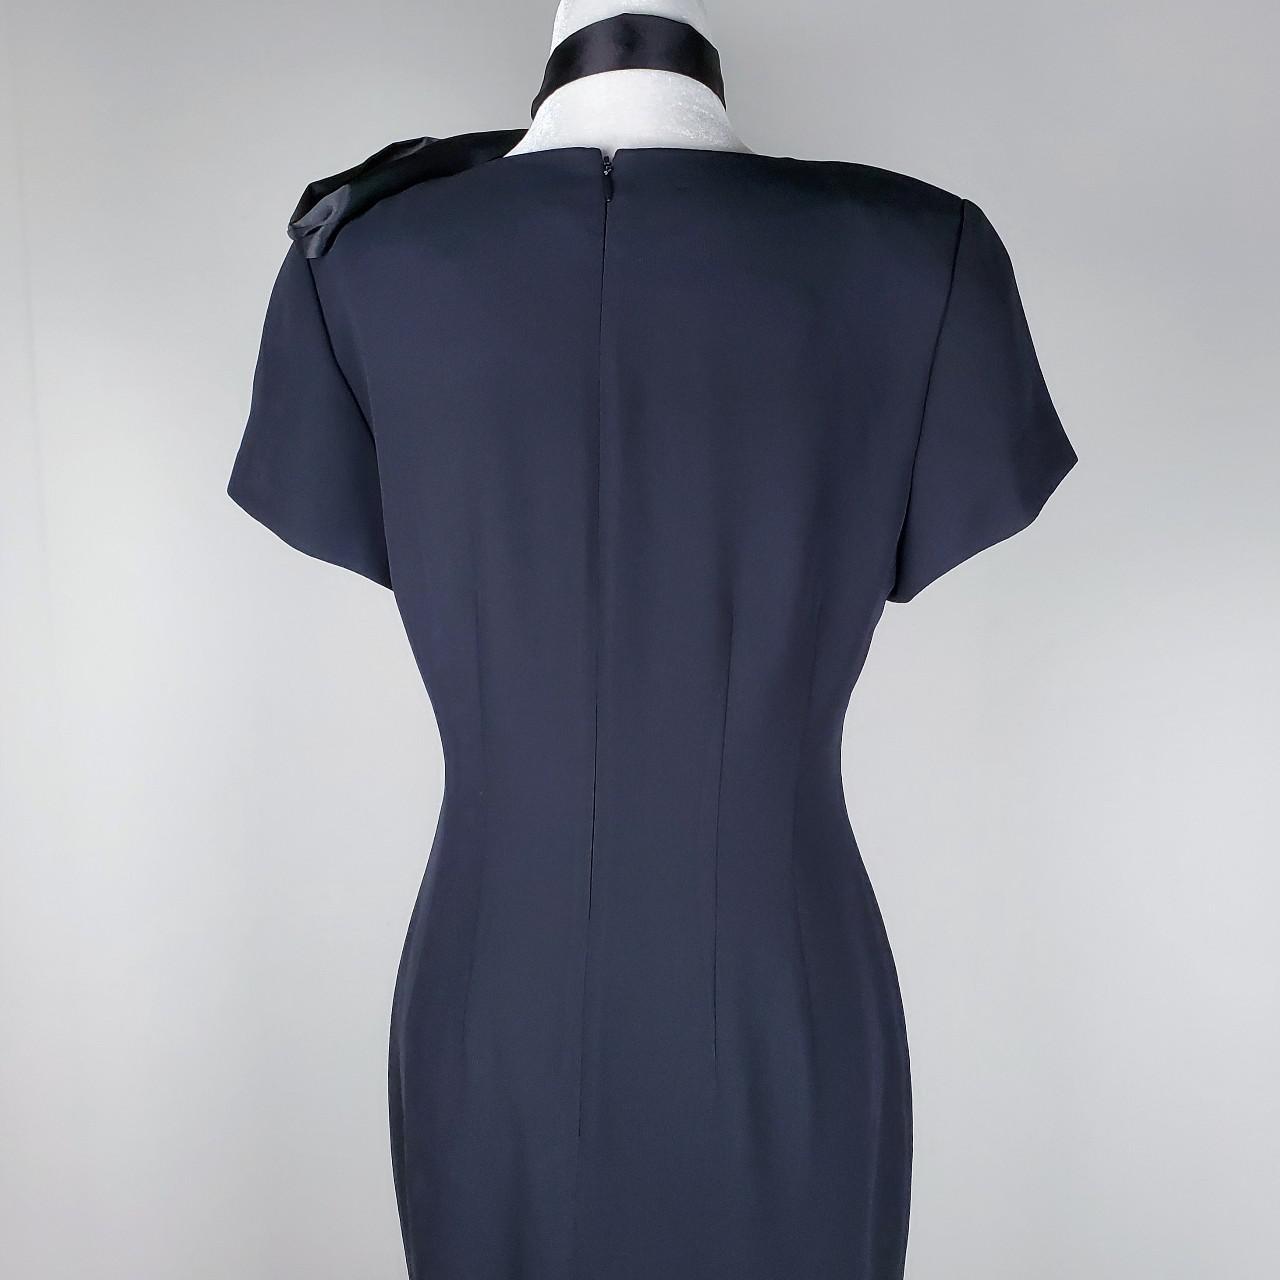 Liz Claiborne Women's Black Dress (3)